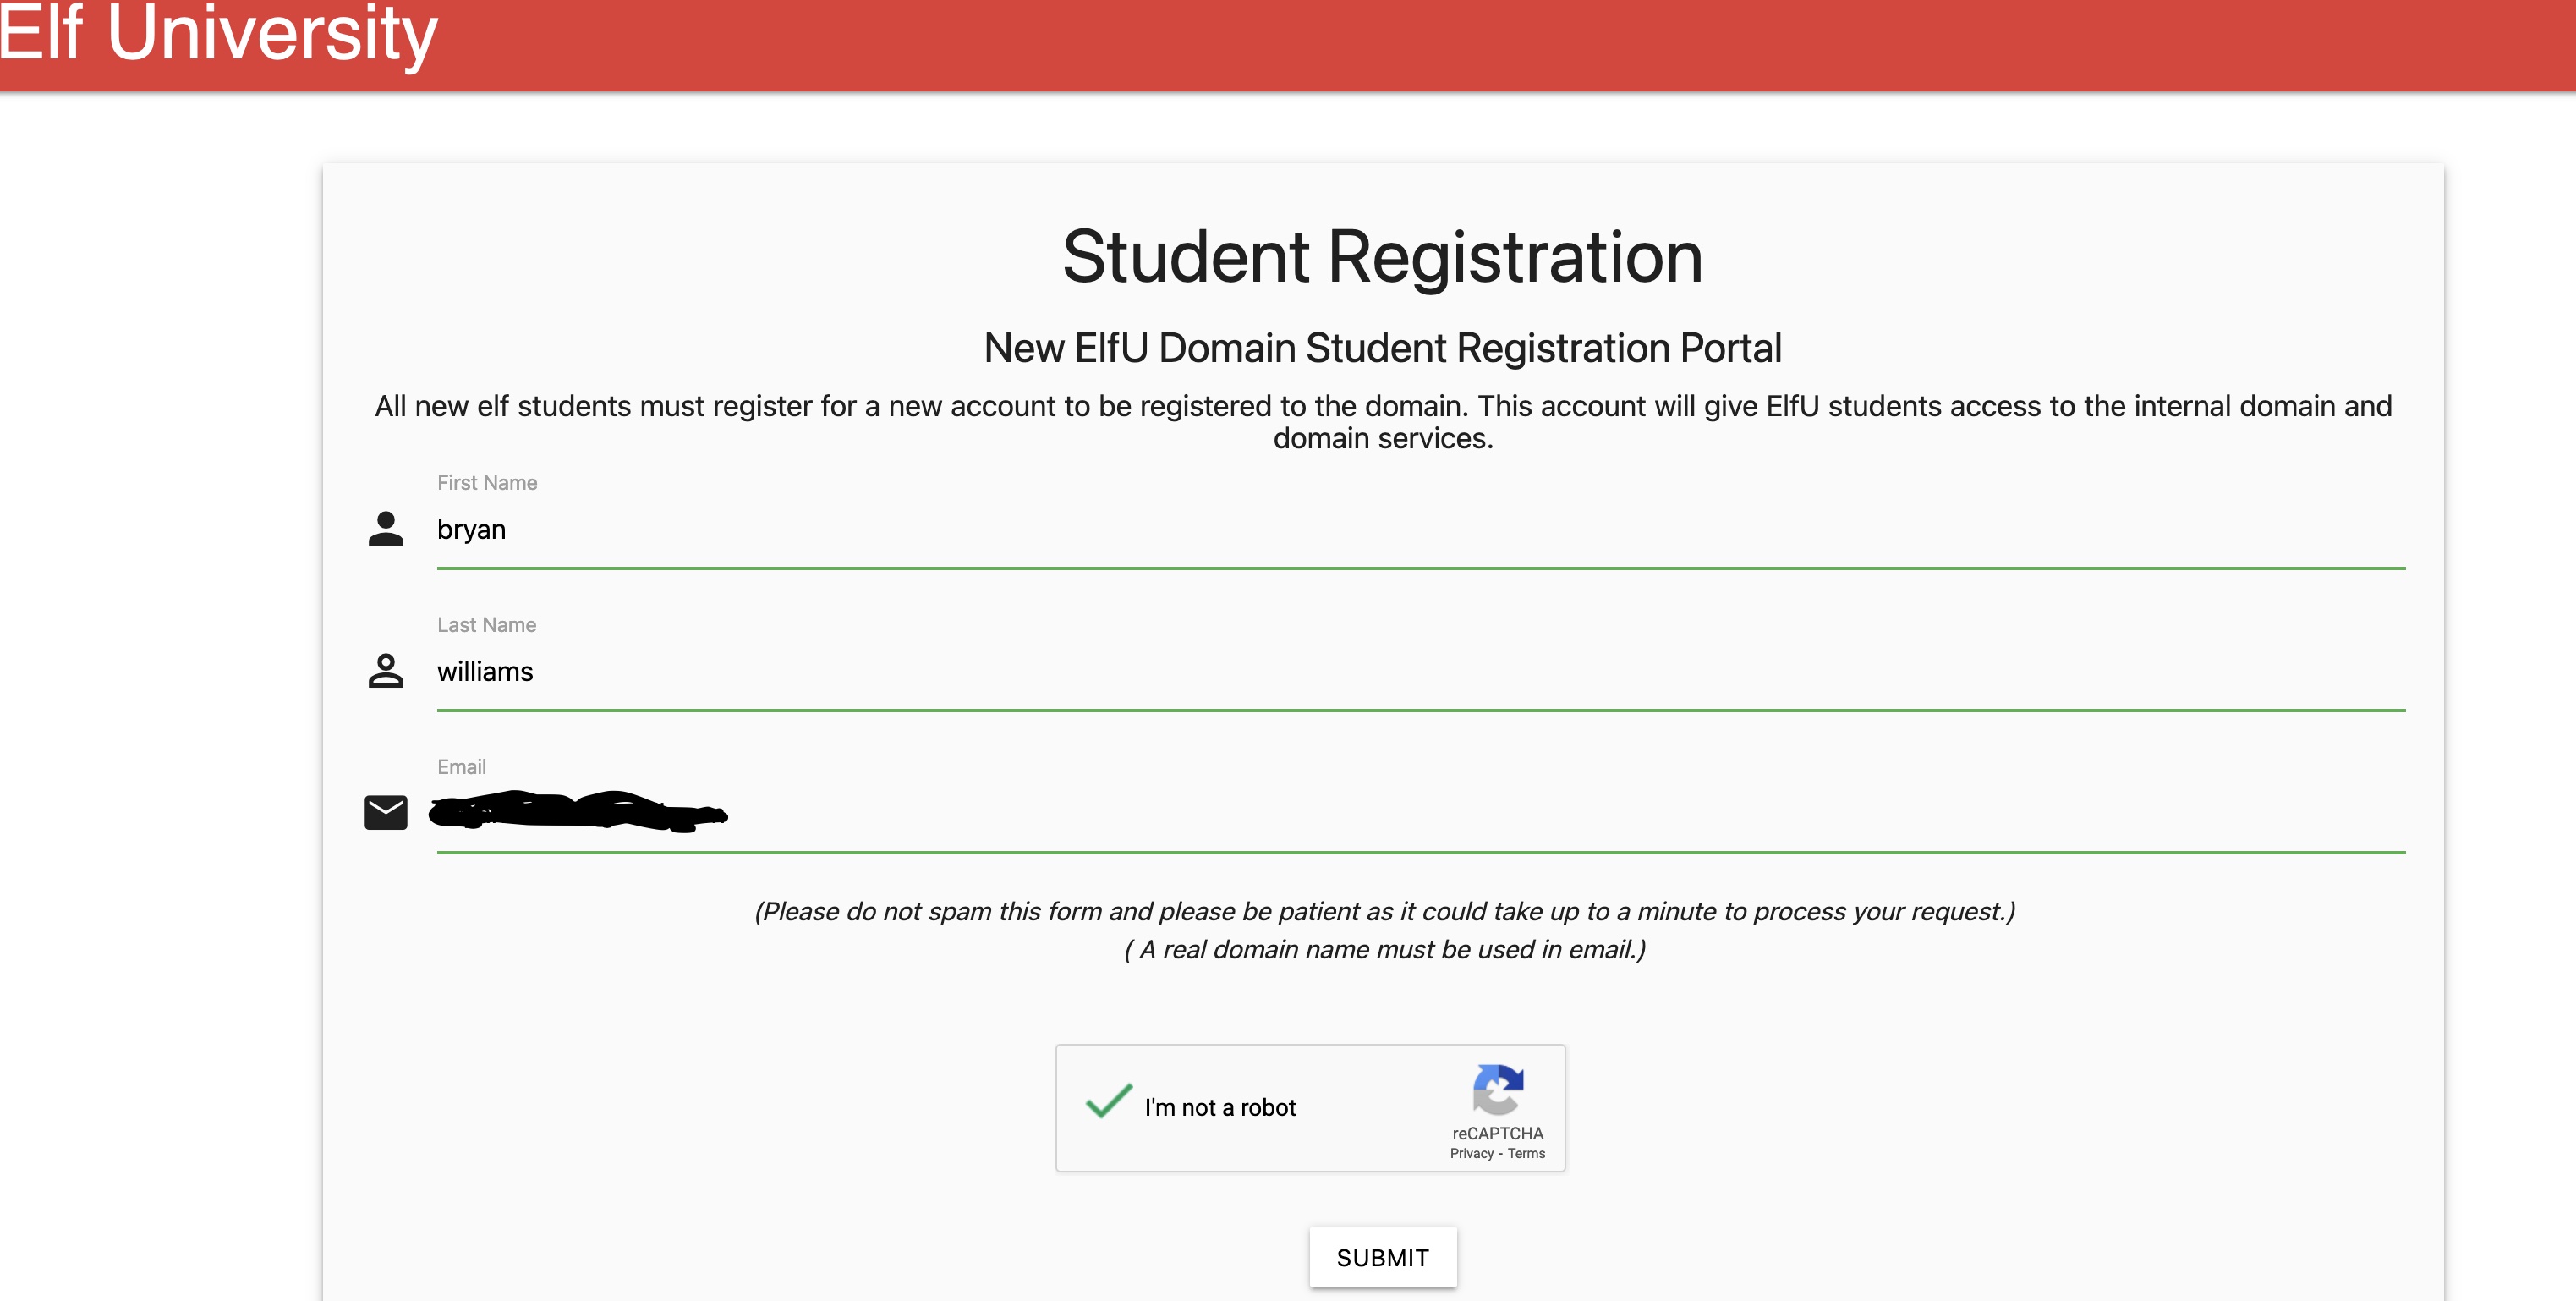 ElfU Registration